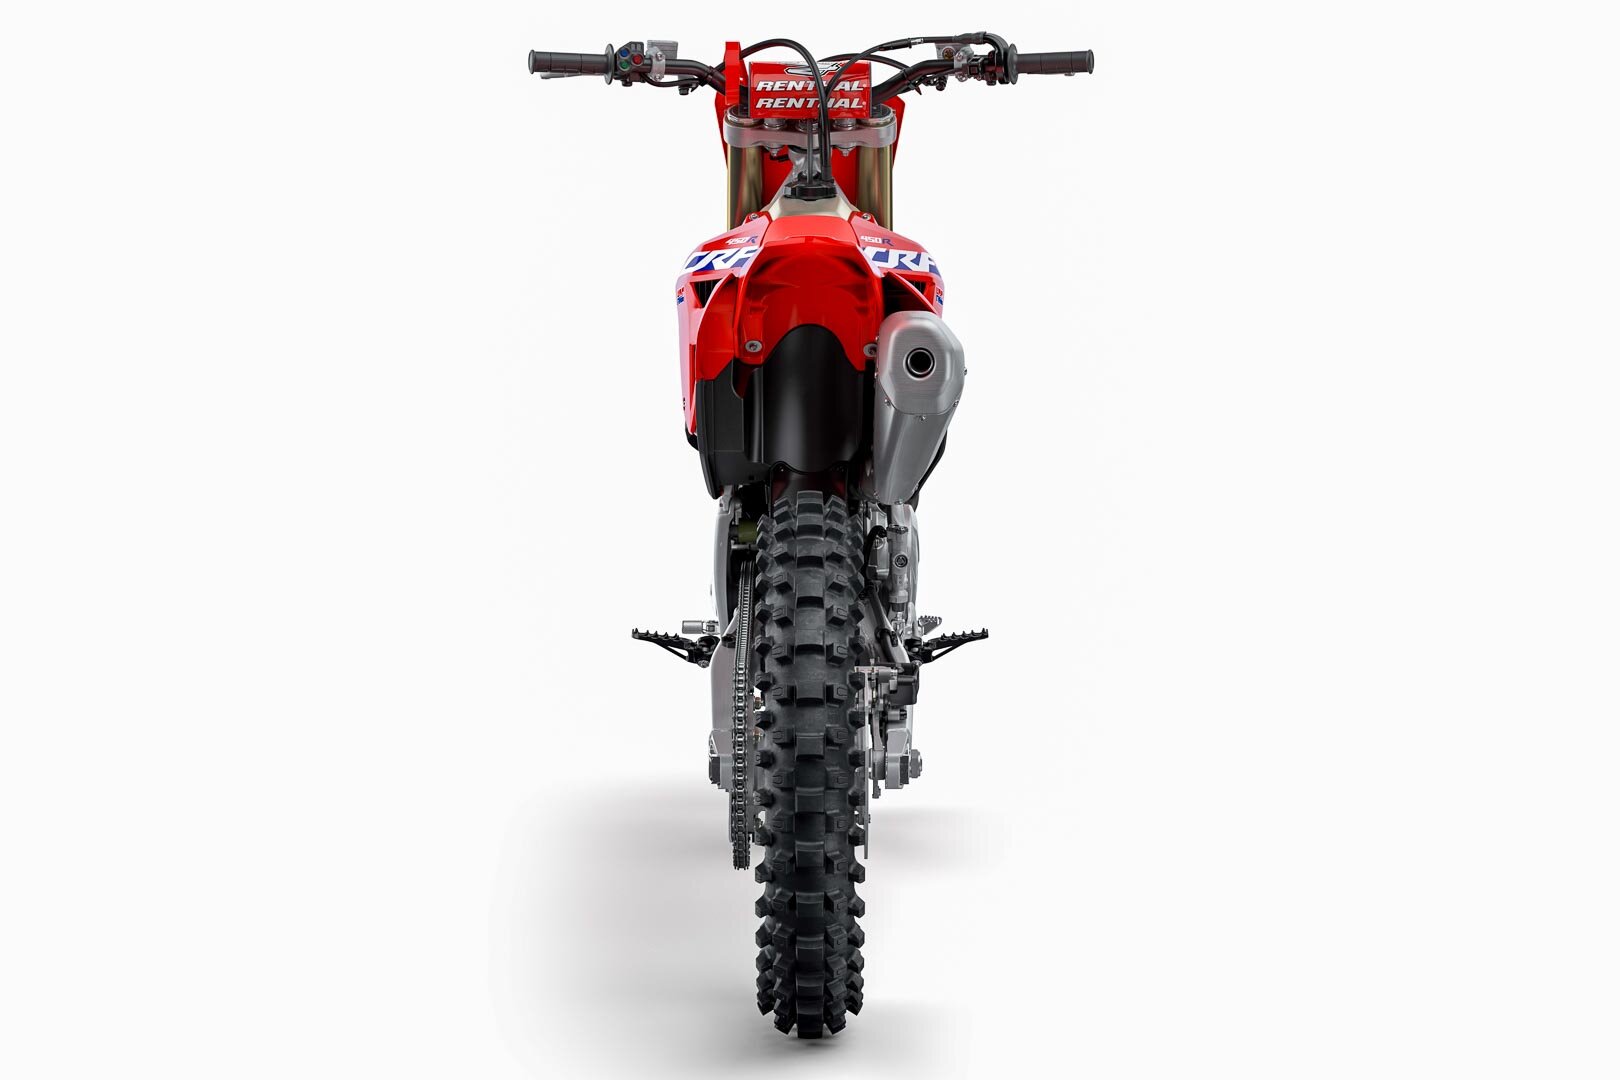 2021-Honda-CRF450R-First-Look-motocross-supercross-motorcycle-7.jpg